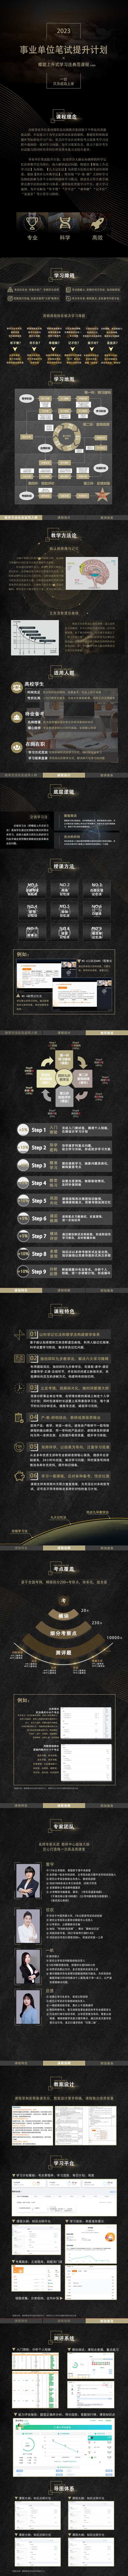 https://simg01.gaodunwangxiao.com/uploadfiles/product-center/202309/06/7144e_20230906153300.jpg